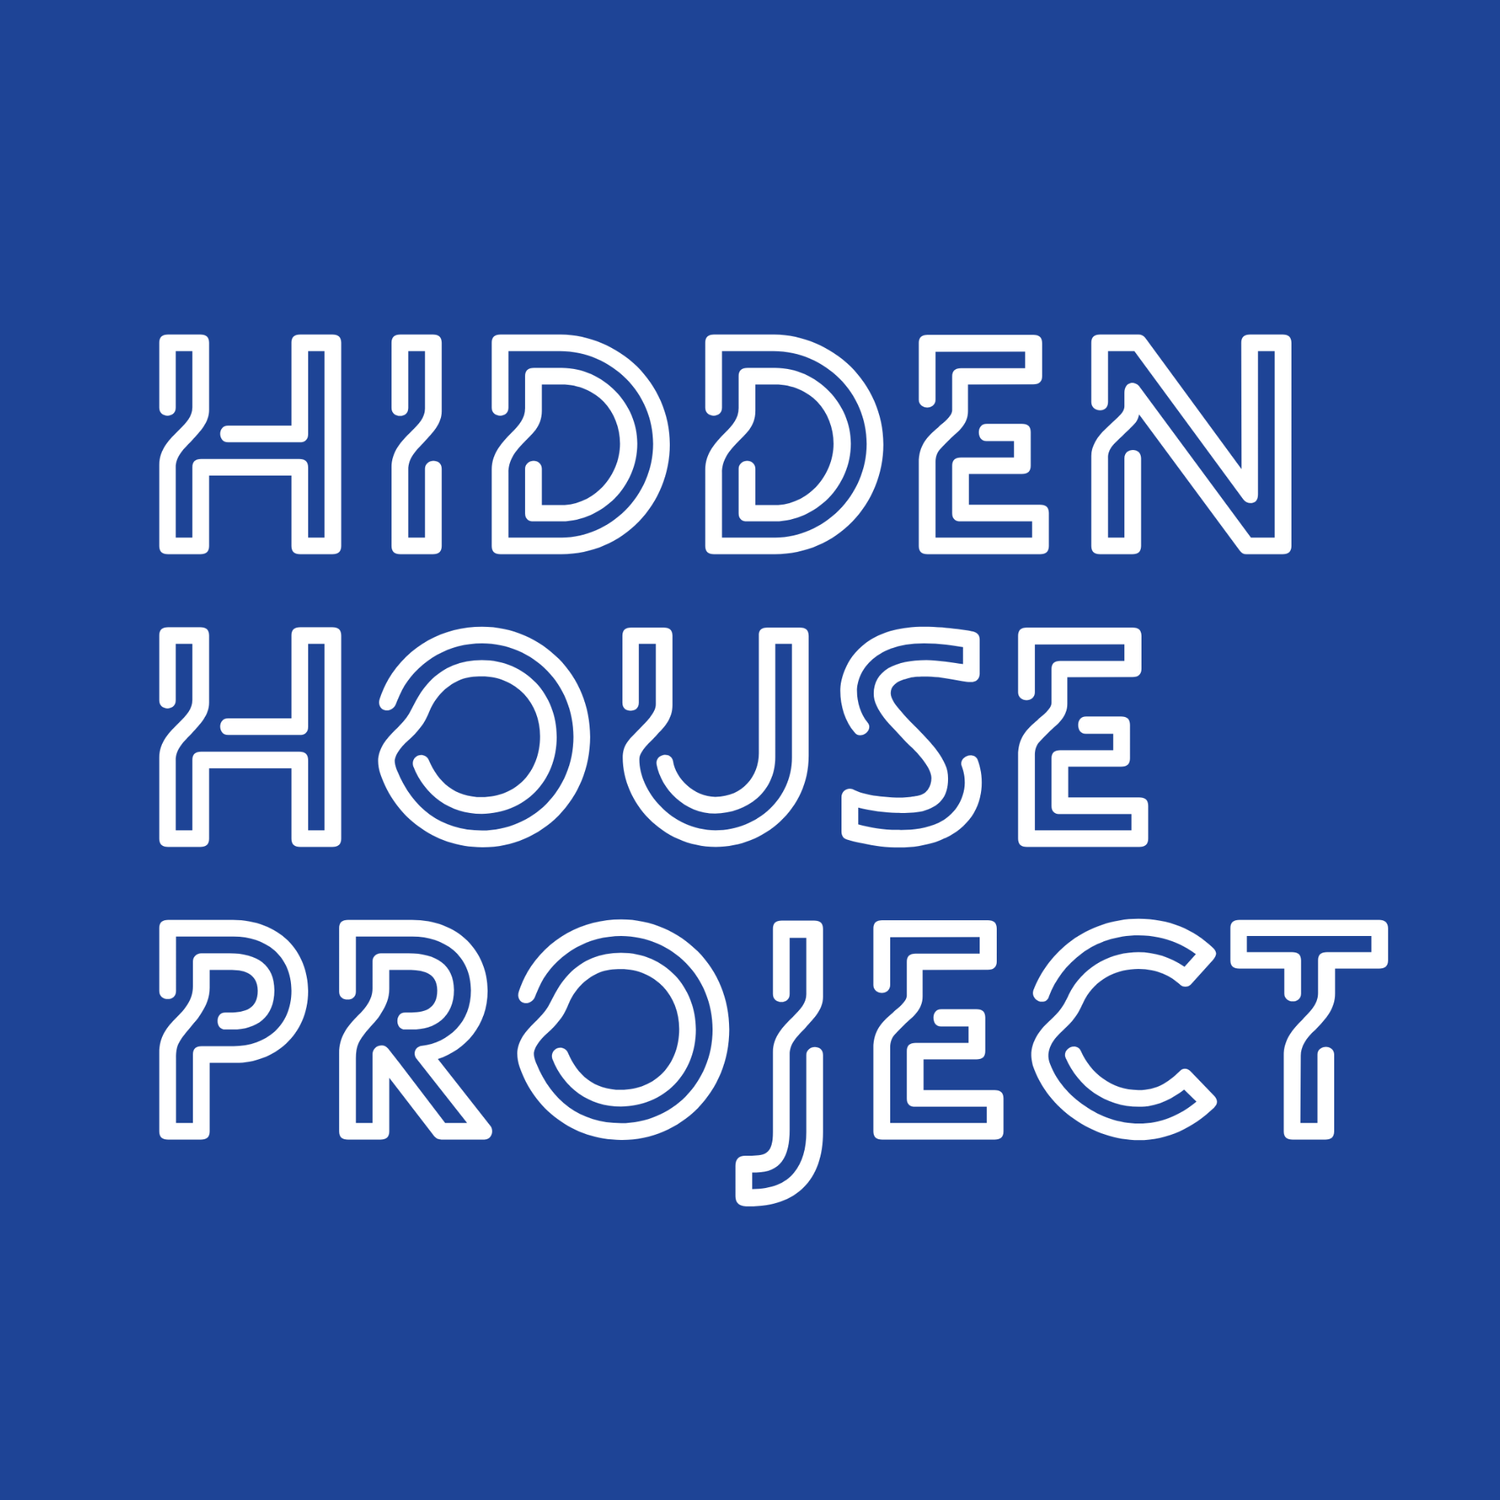 Hidden House Project | Estate Agency